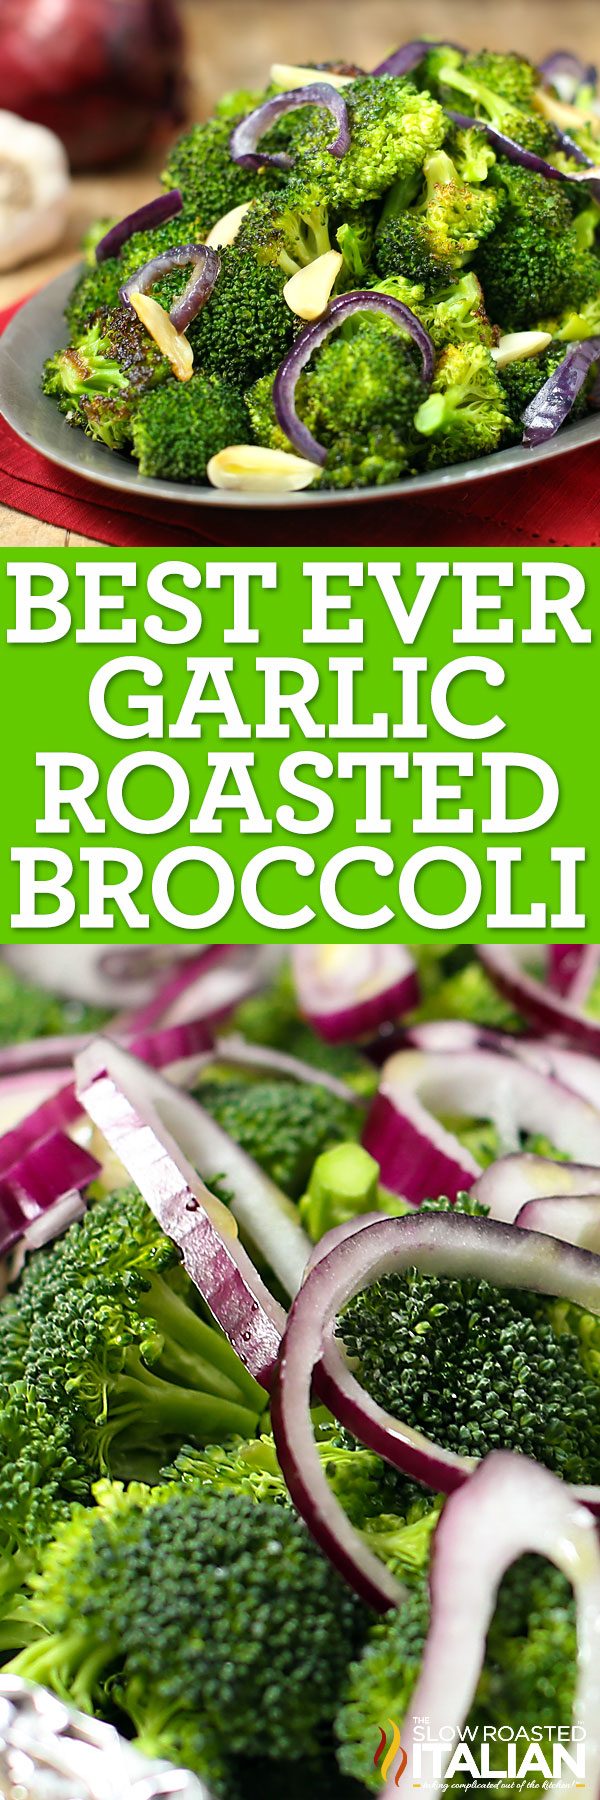 best-ever-garlic-roasted-broccoli-pin-7990813